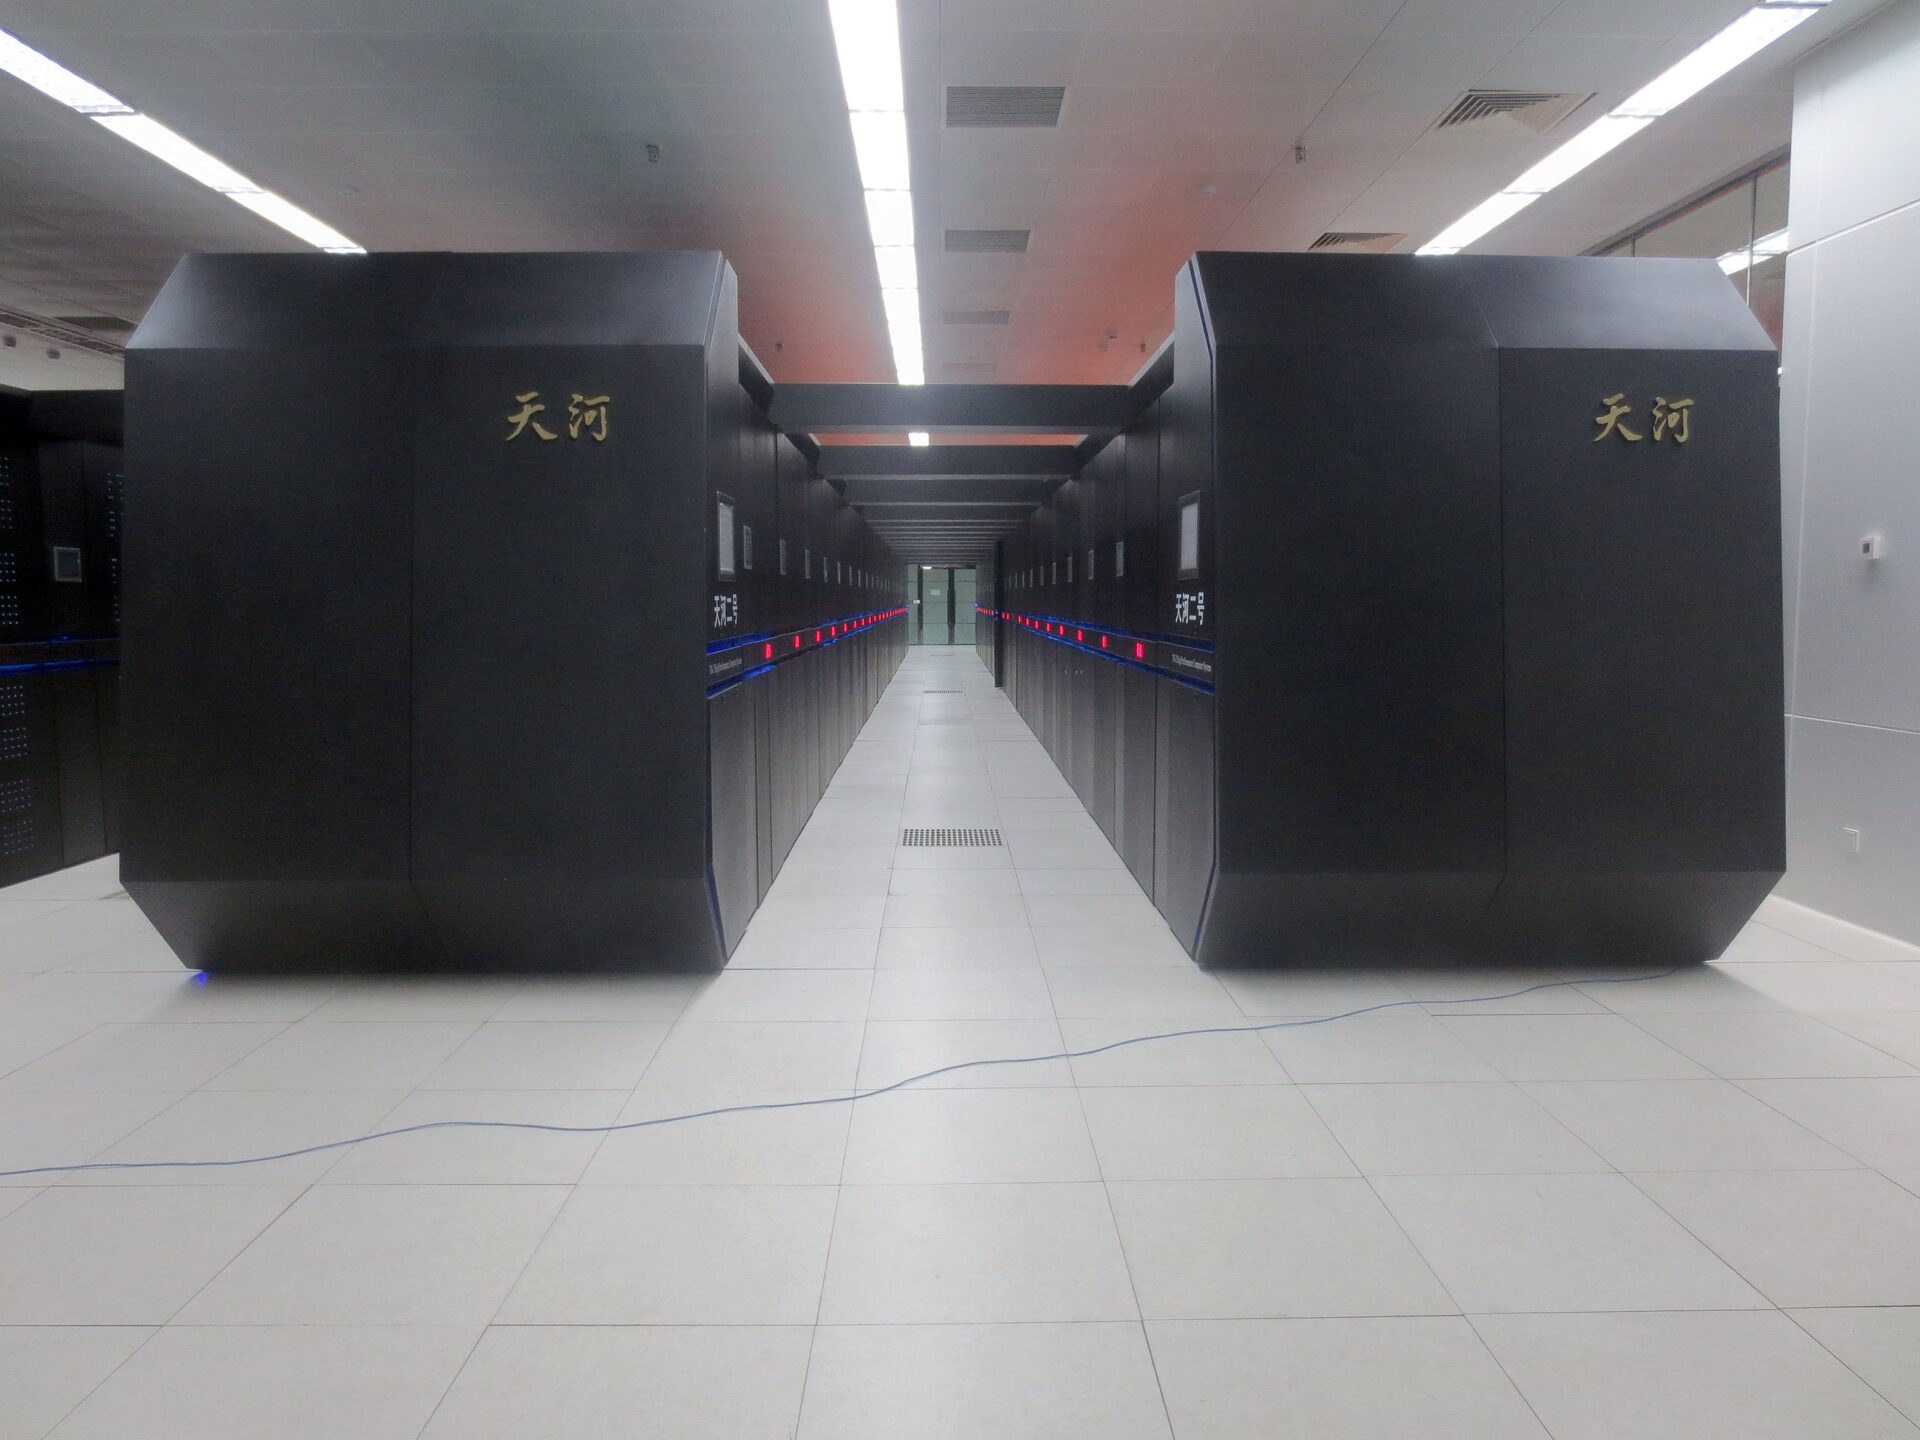 Kinas superdator lanseras i tysthet